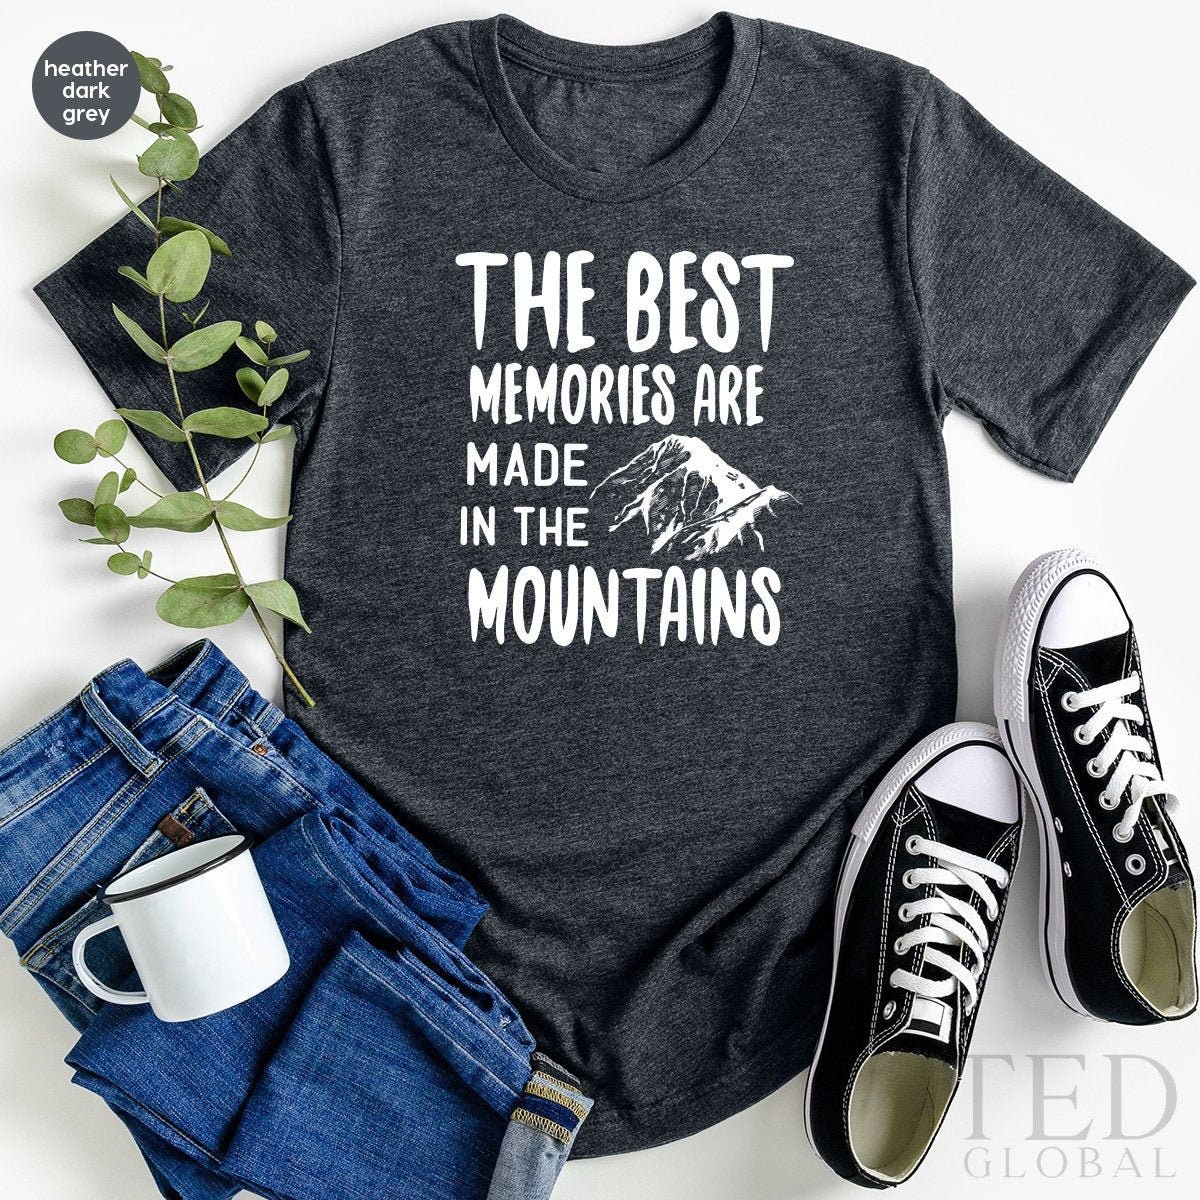 Mountains T Shirt, Adventure T-Shirt, Hiker Friends TShirt, Best Memories Shirt, Hiking Shirt, Gift For Travel Lover, Mens Trip Tees - Fastdeliverytees.com